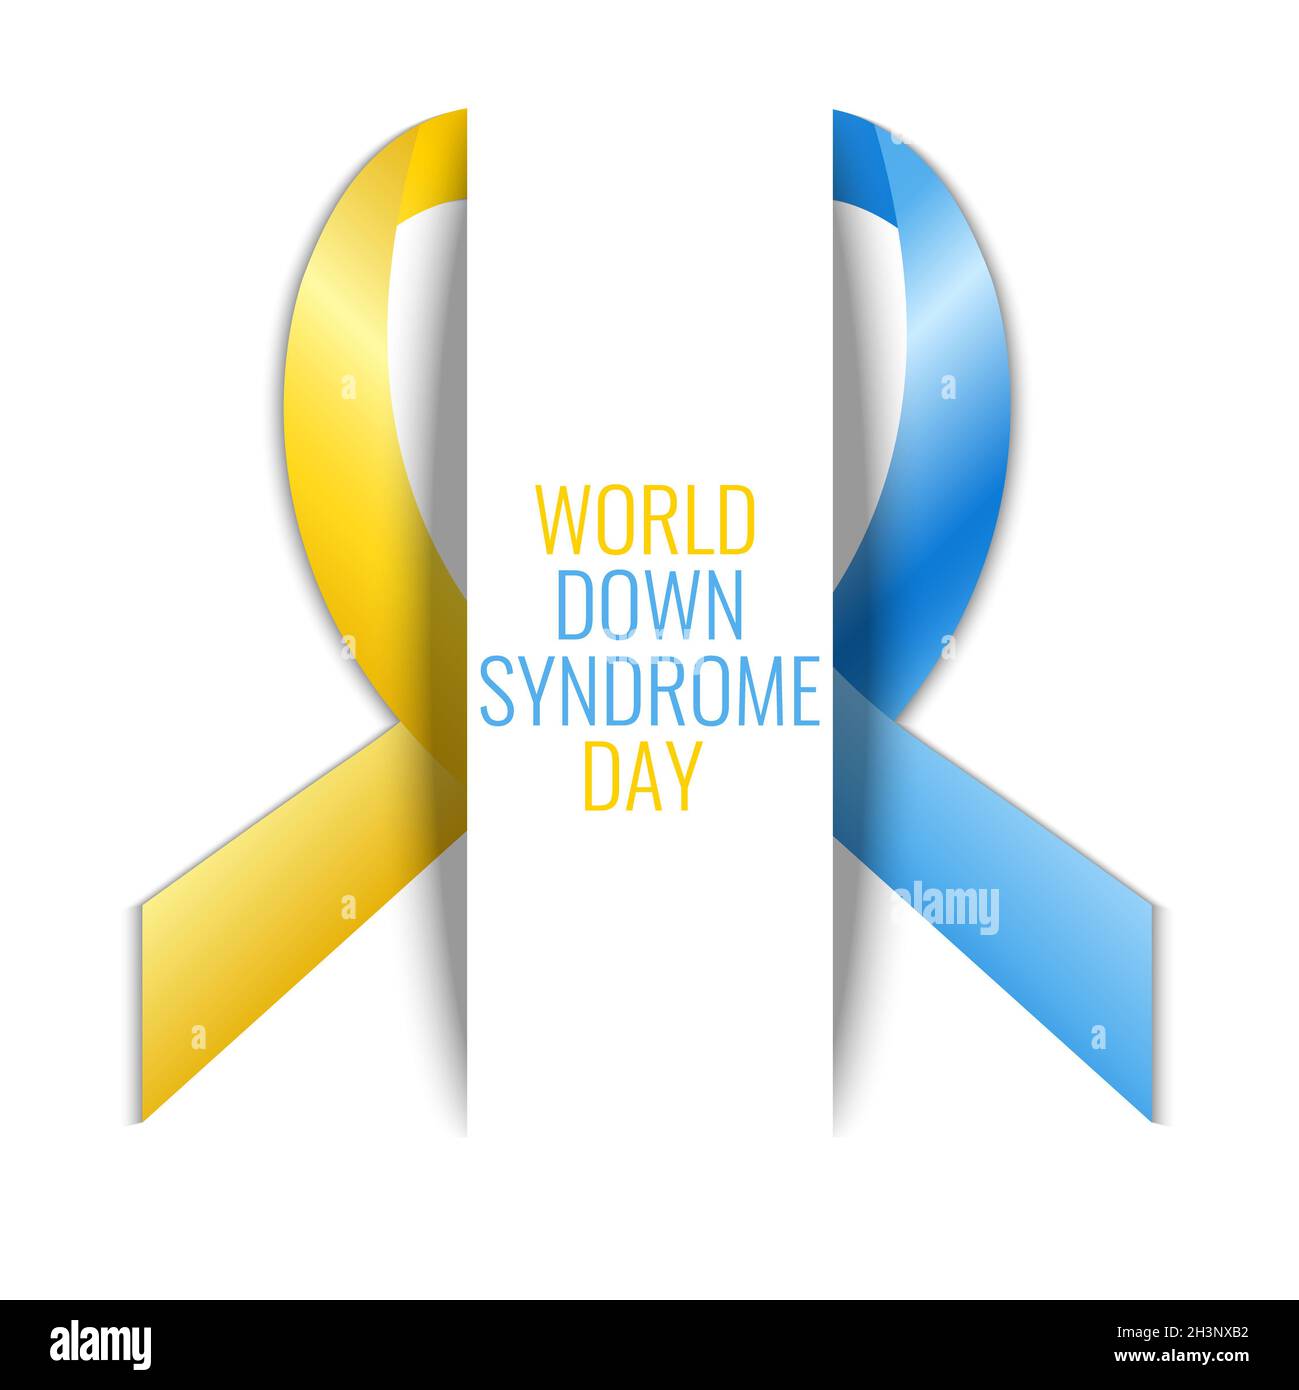 Down syndrome, conceptual illustration Stock Photo